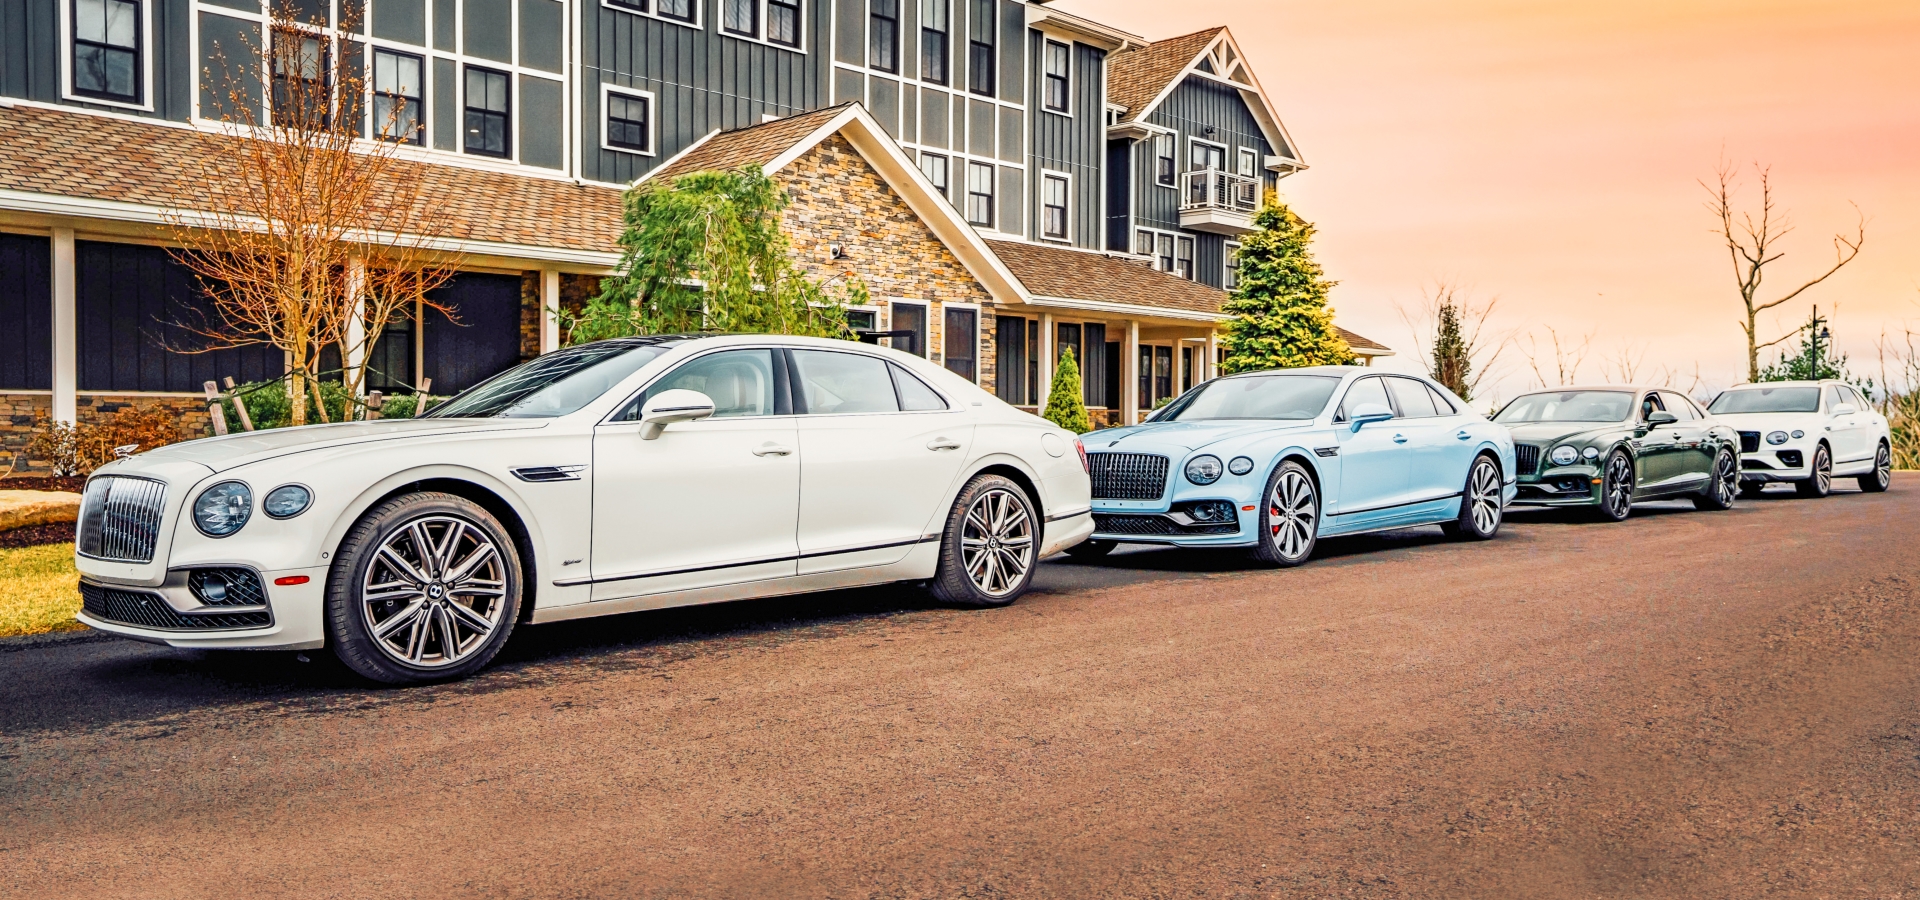 Luxury meets adventure at The Preserve Resort & Spa's Bentley event.